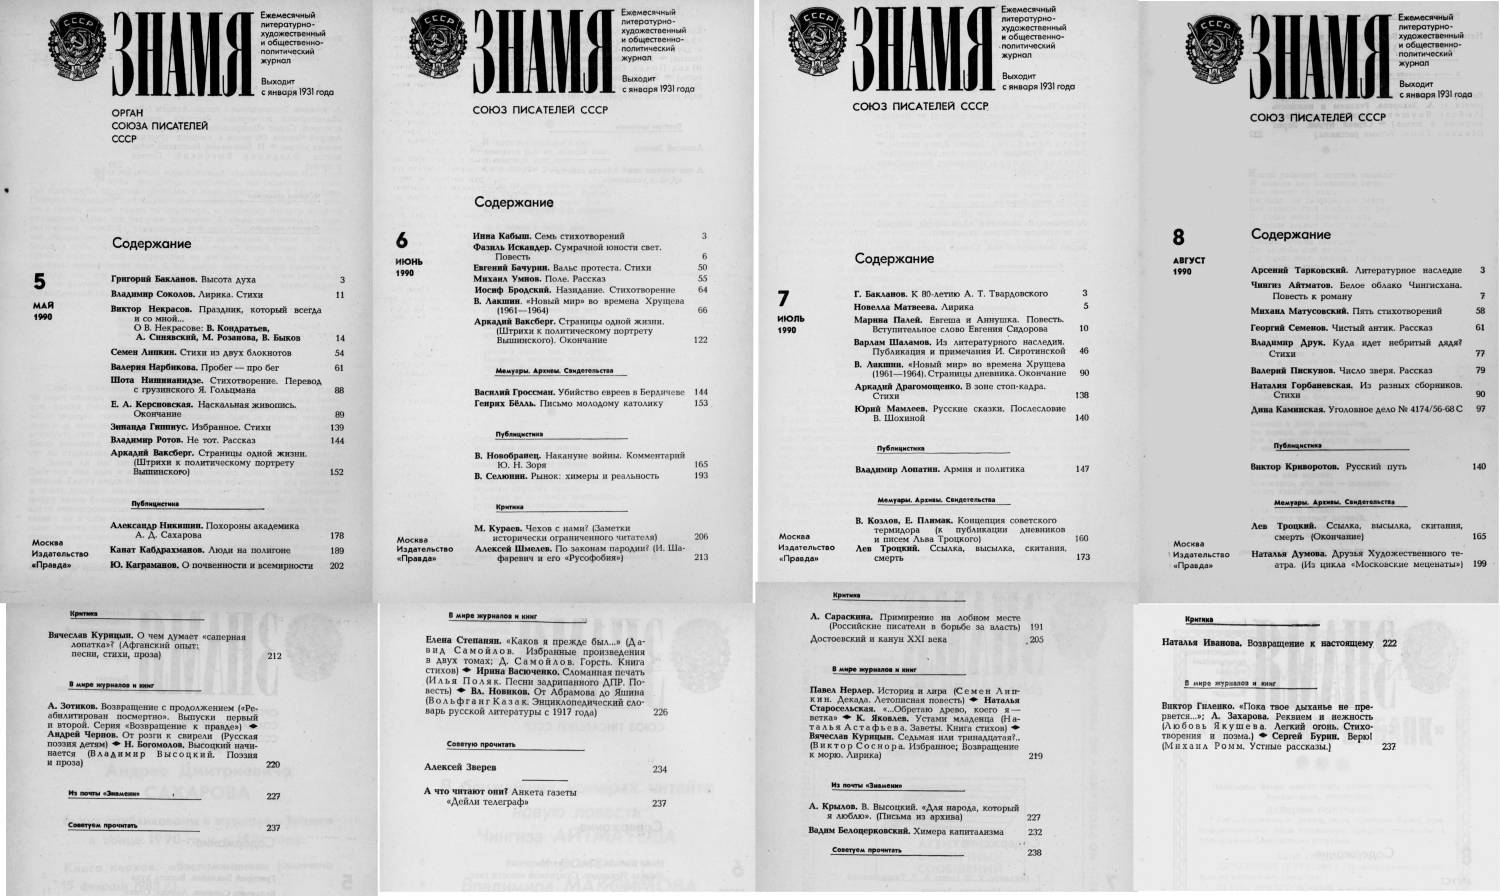 Журналы перестройки. Журнал Знамя. Журнал Знамя 1987. Журнал Знамя 1988. Журнал Знамя первый номер.